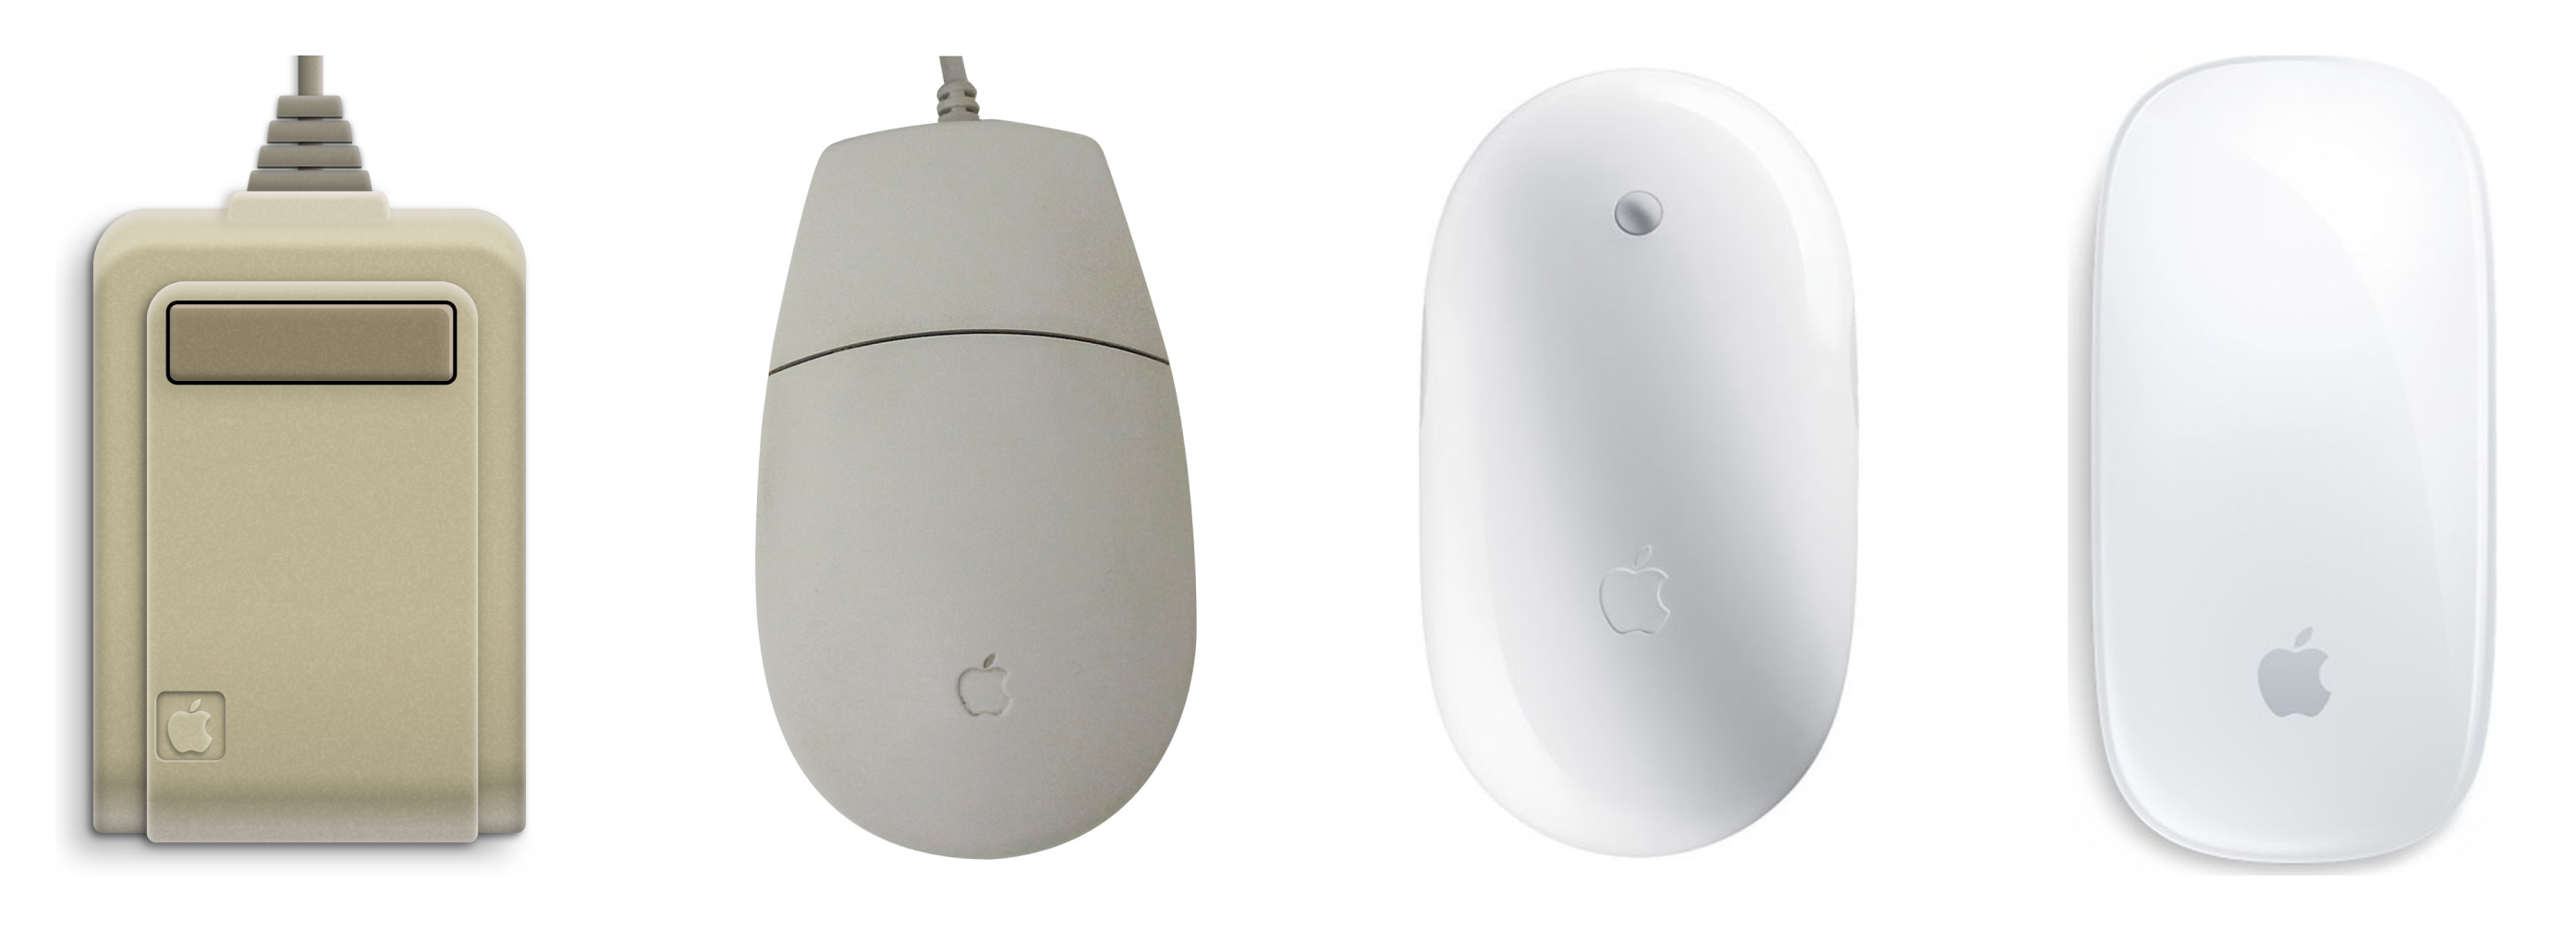 Apple Mouse Evolution